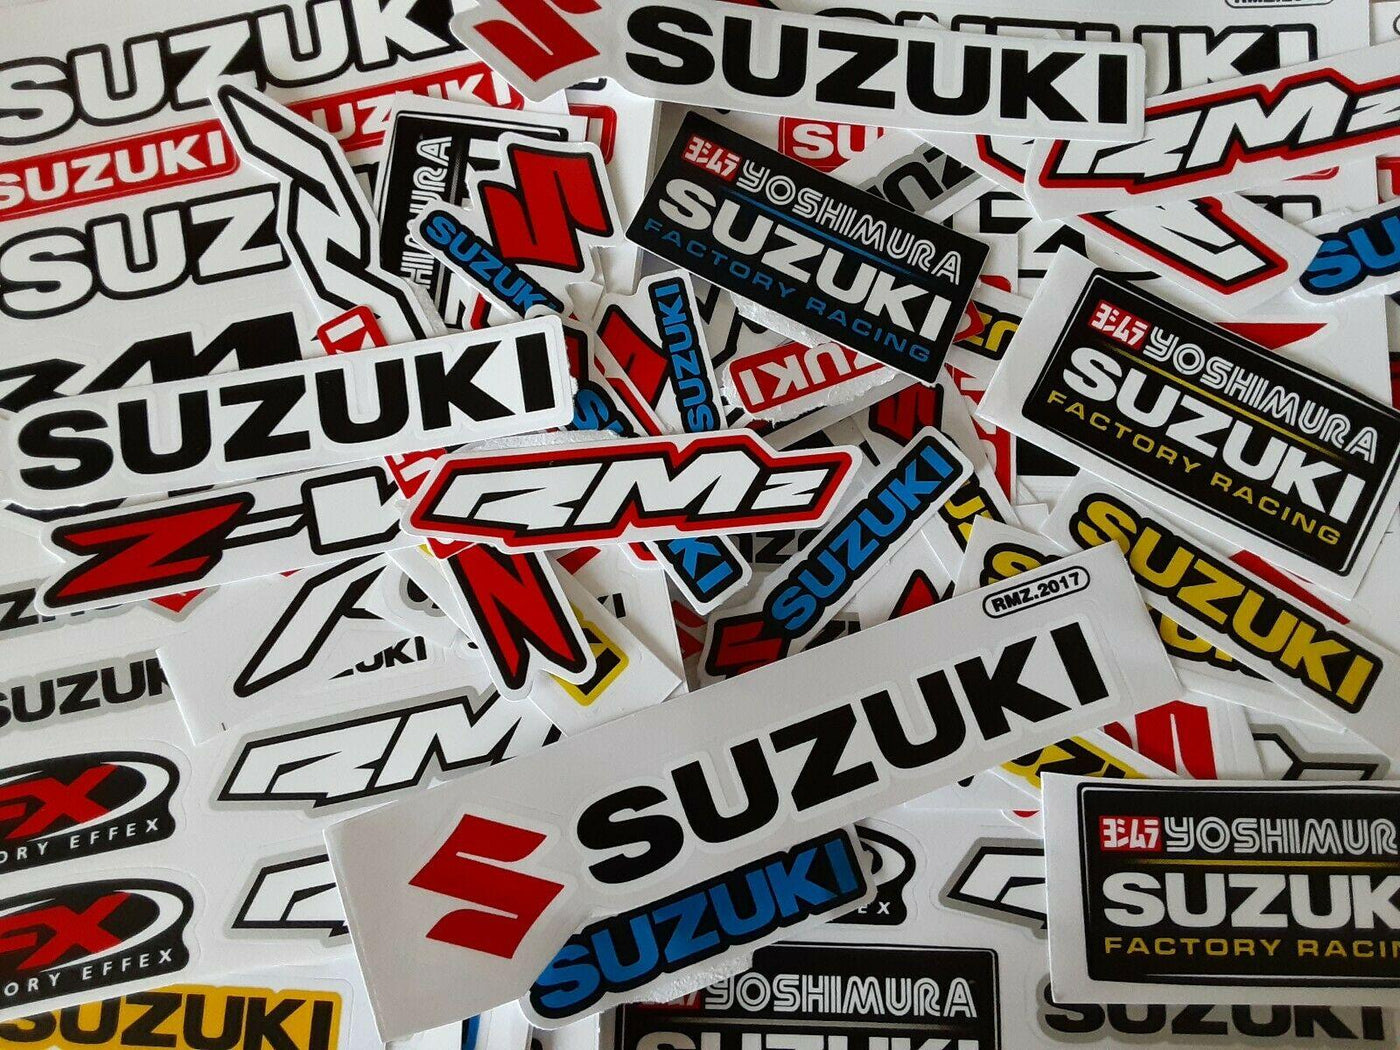 Lot Set of 10 Suzuki Style Stickers Racing Motorcycle Motocross RMZ Dirtbike - Moto Life Products